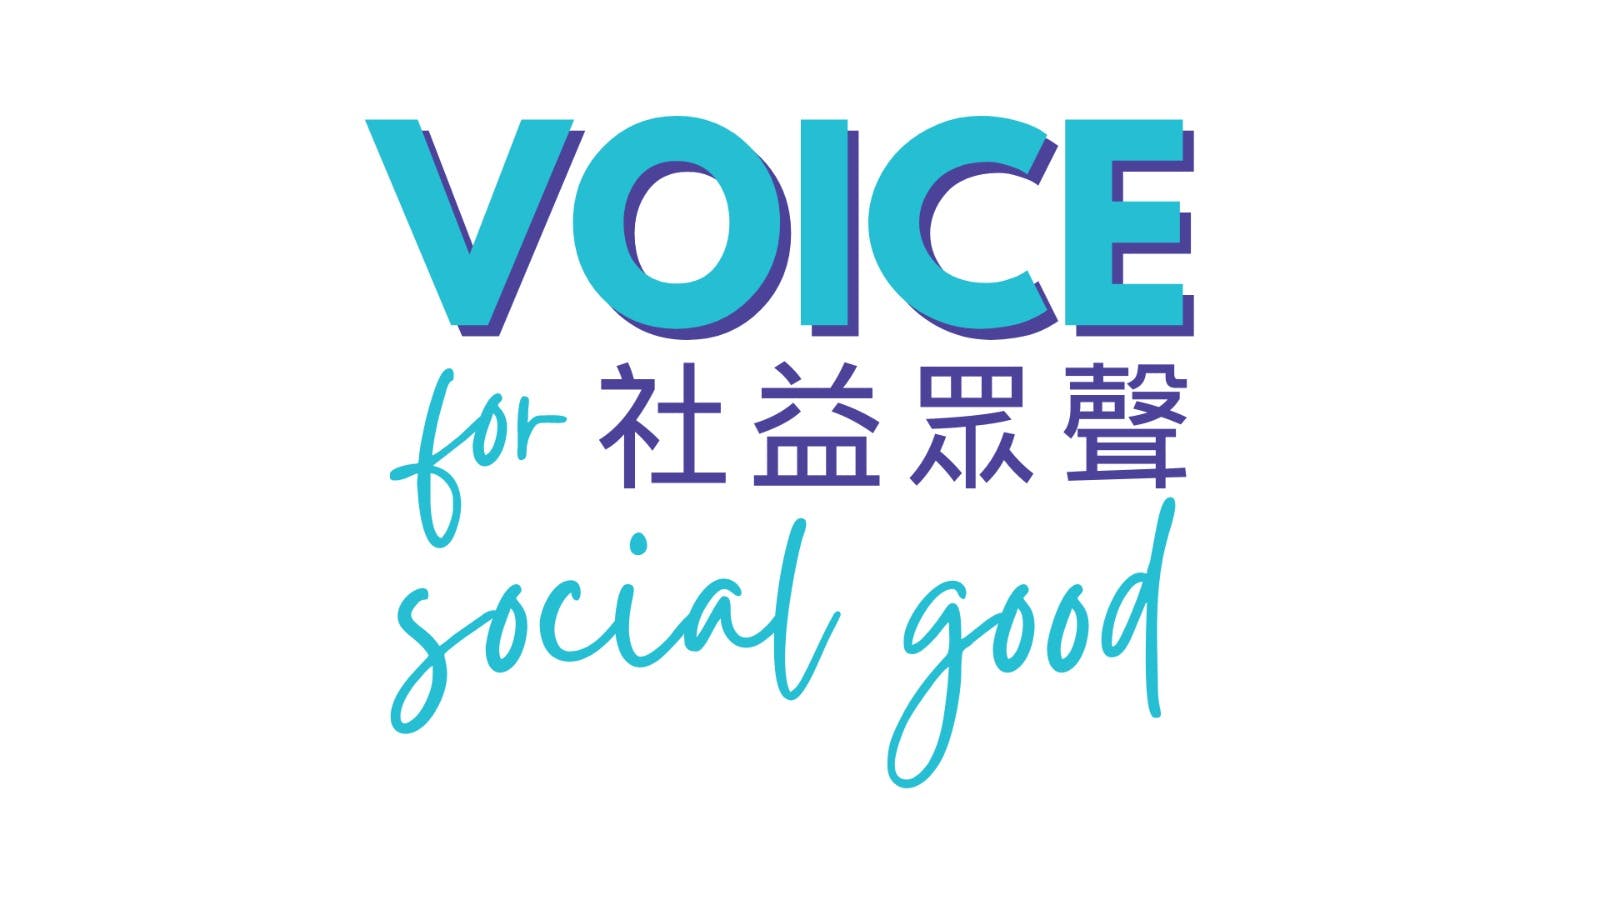 Voice for Social Good